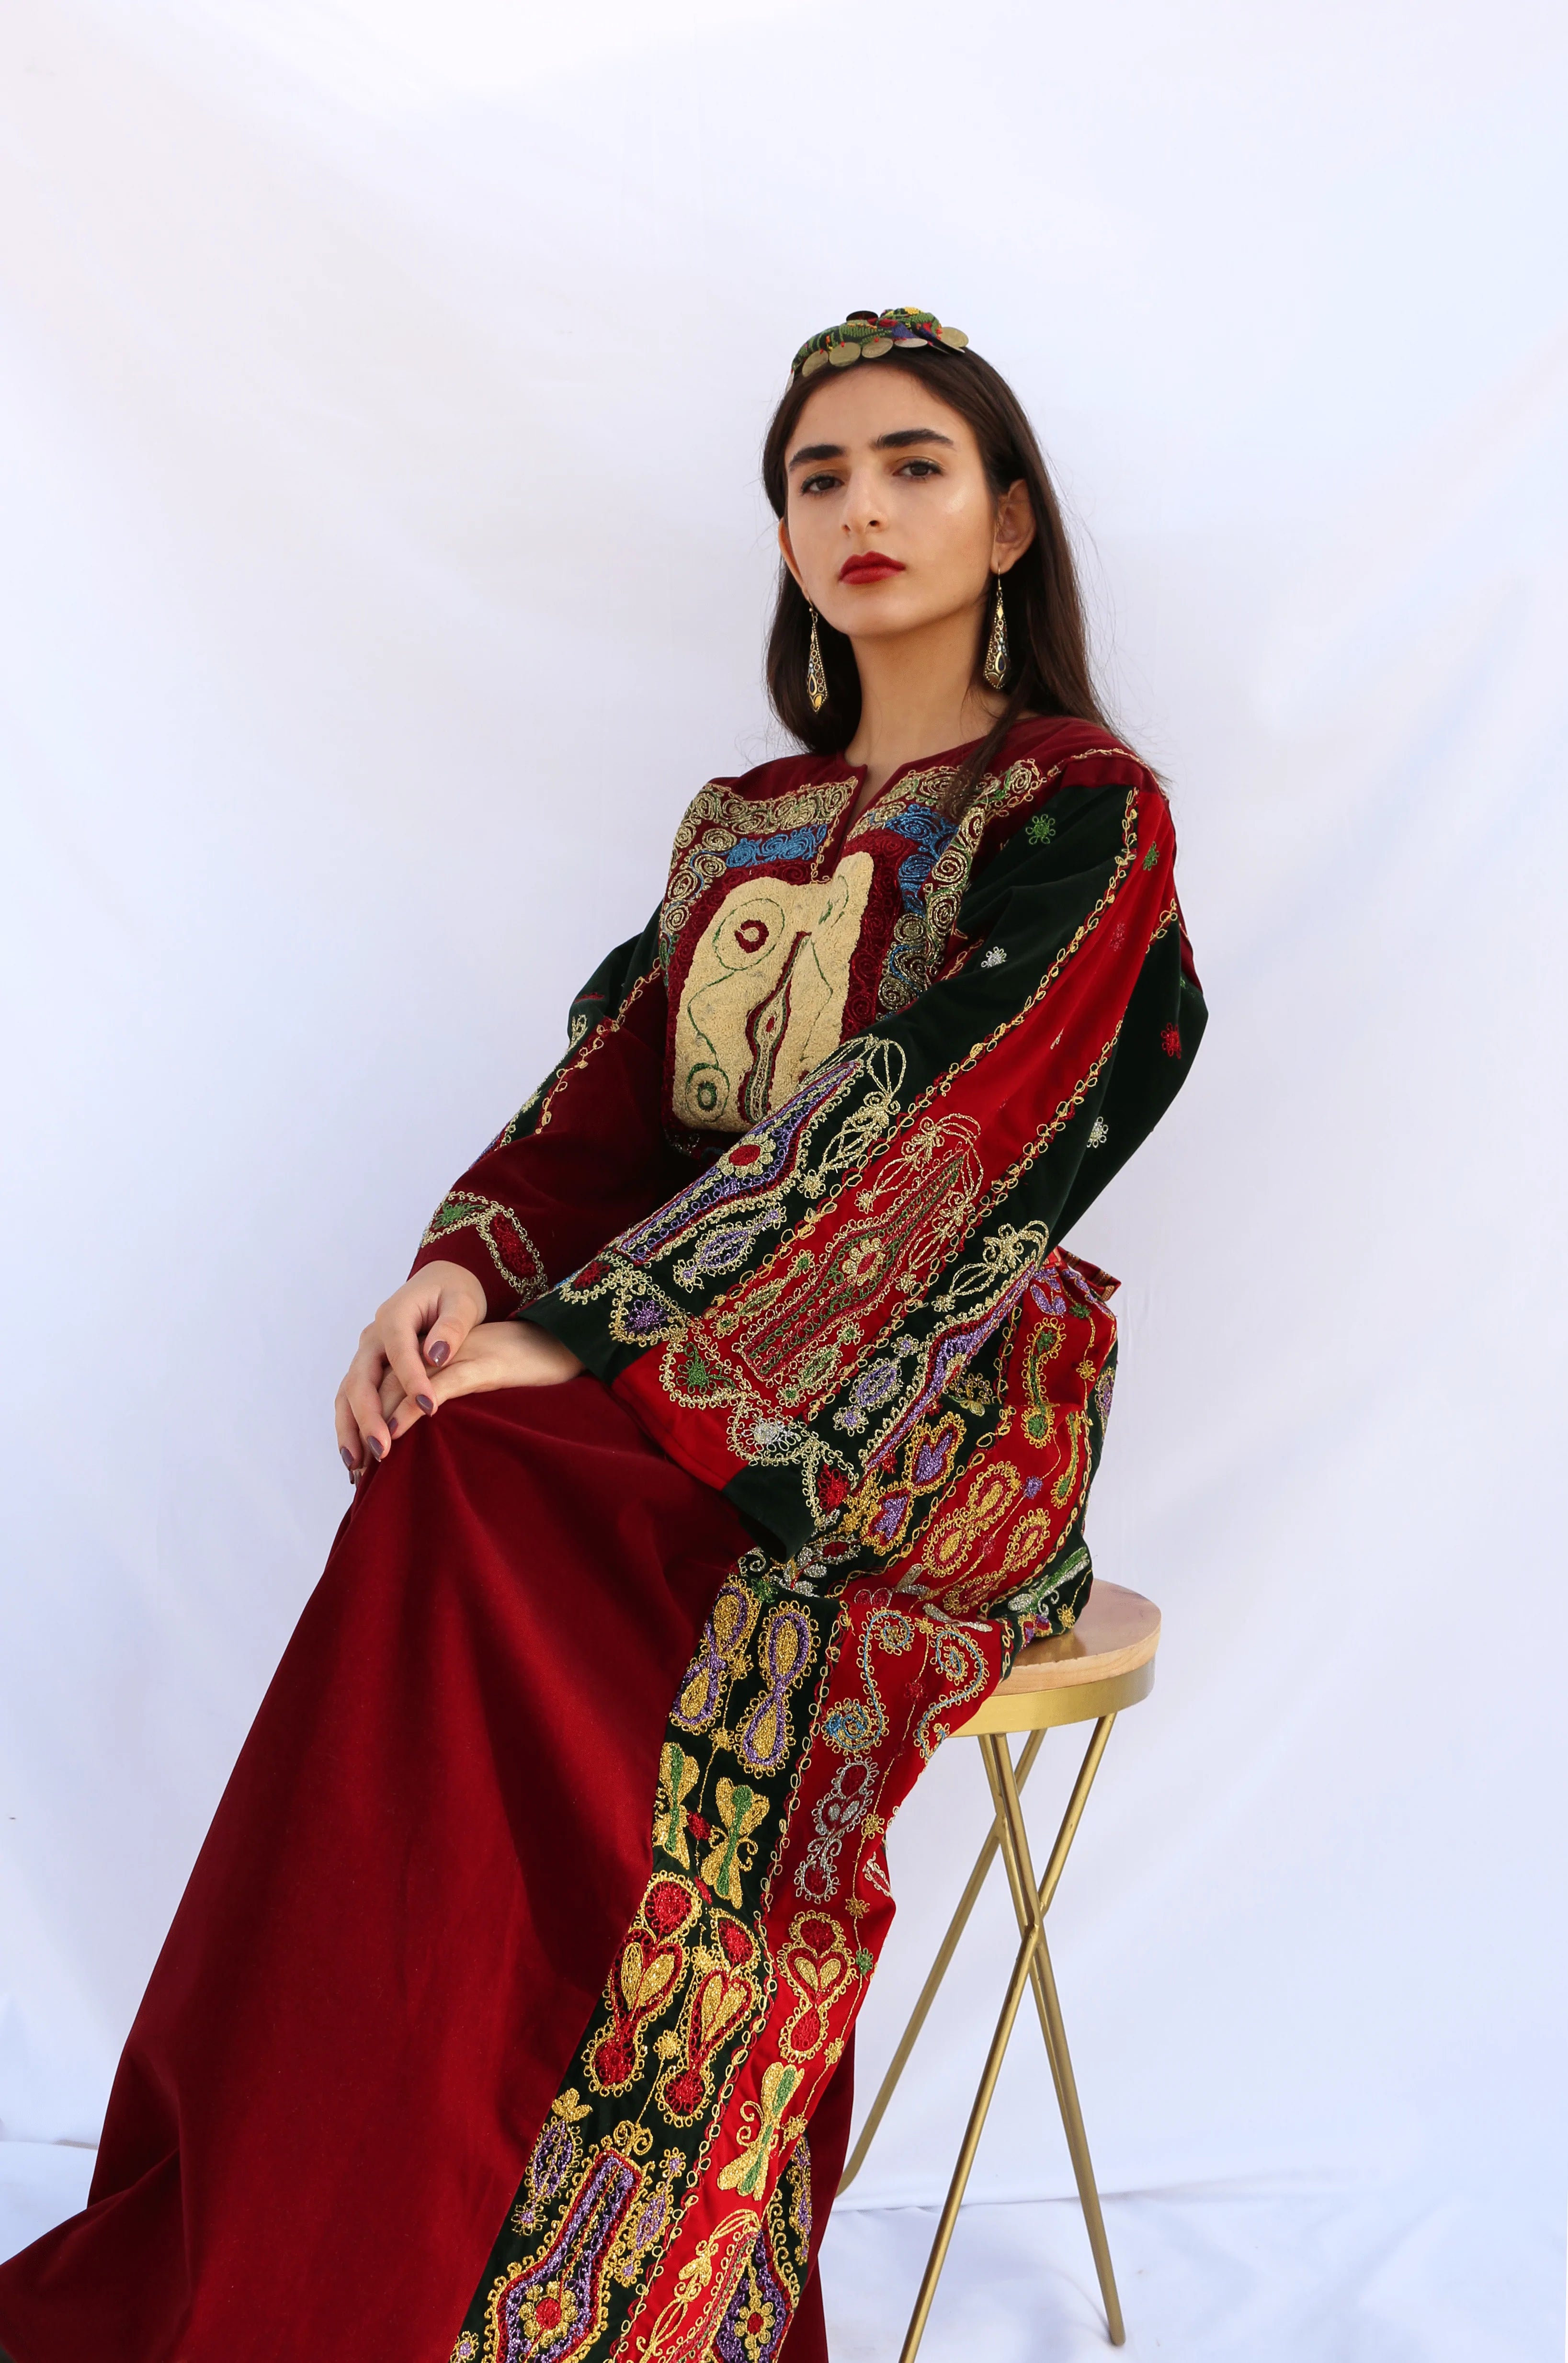 Malaka Hand Embroidered Tahreera Palestinian Dress Thobe Deerah 